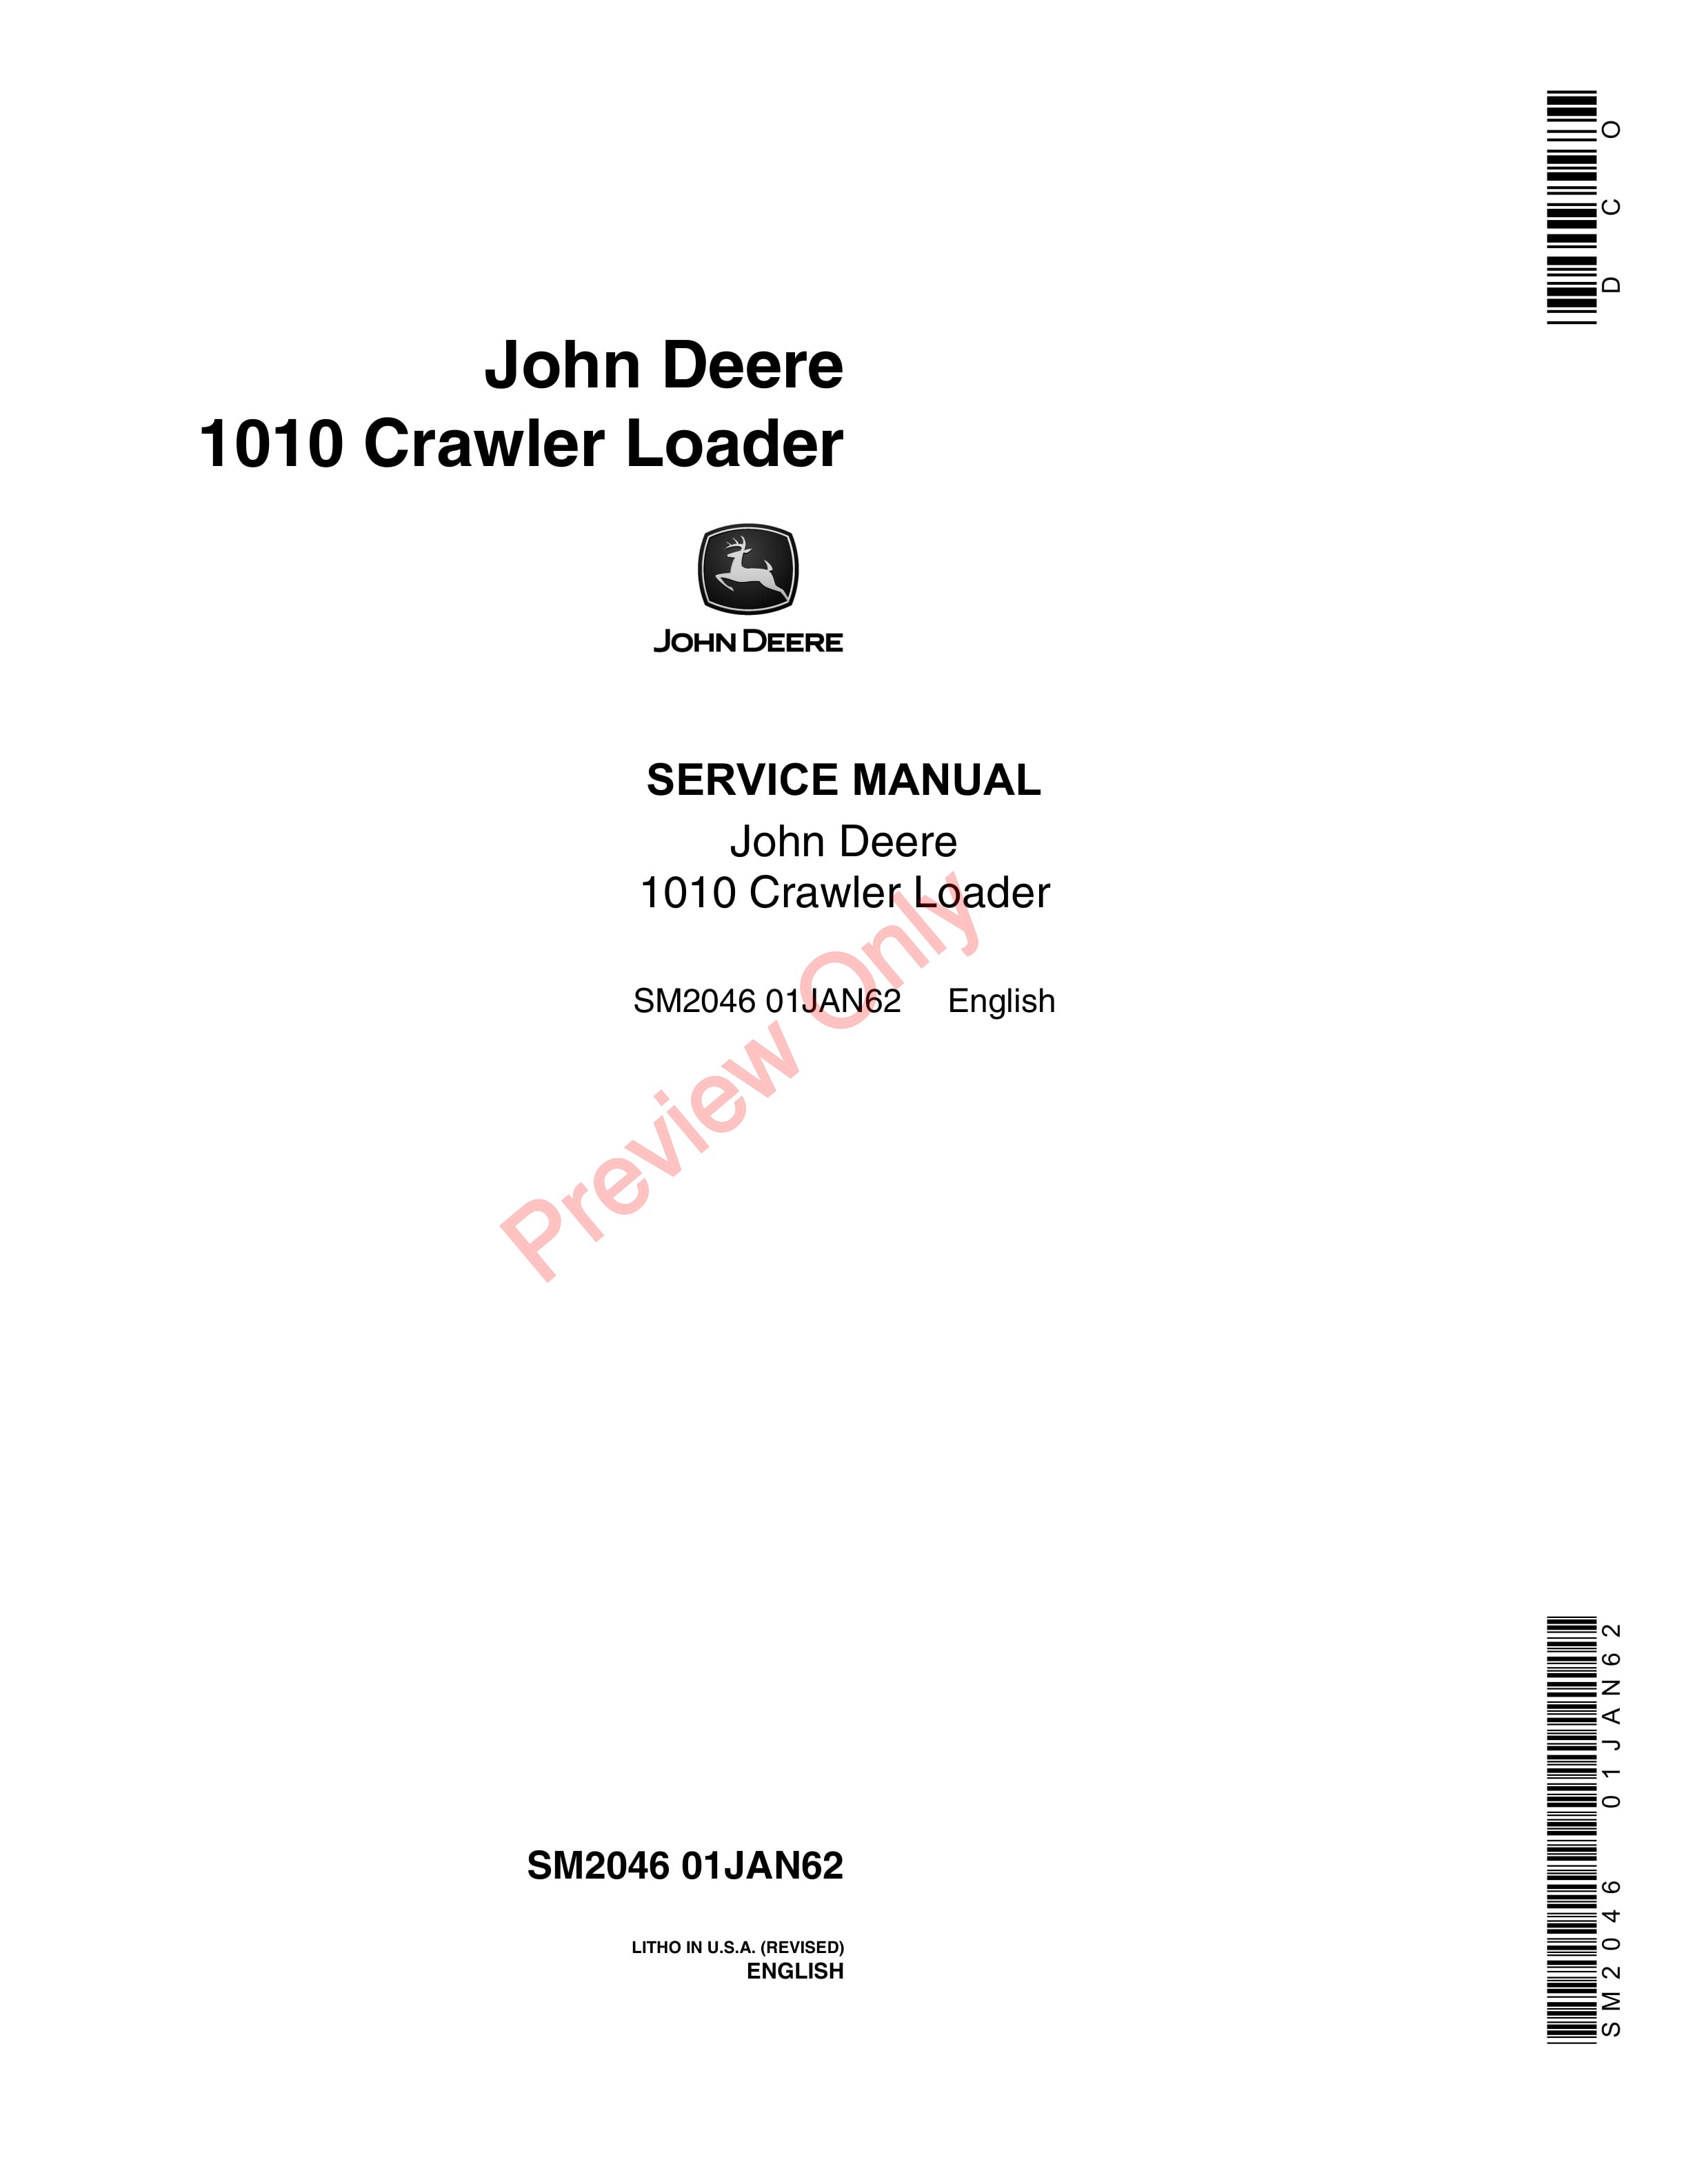 John Deere 1010 Crawler Loader Service Manual SM2046 01JAN62-1